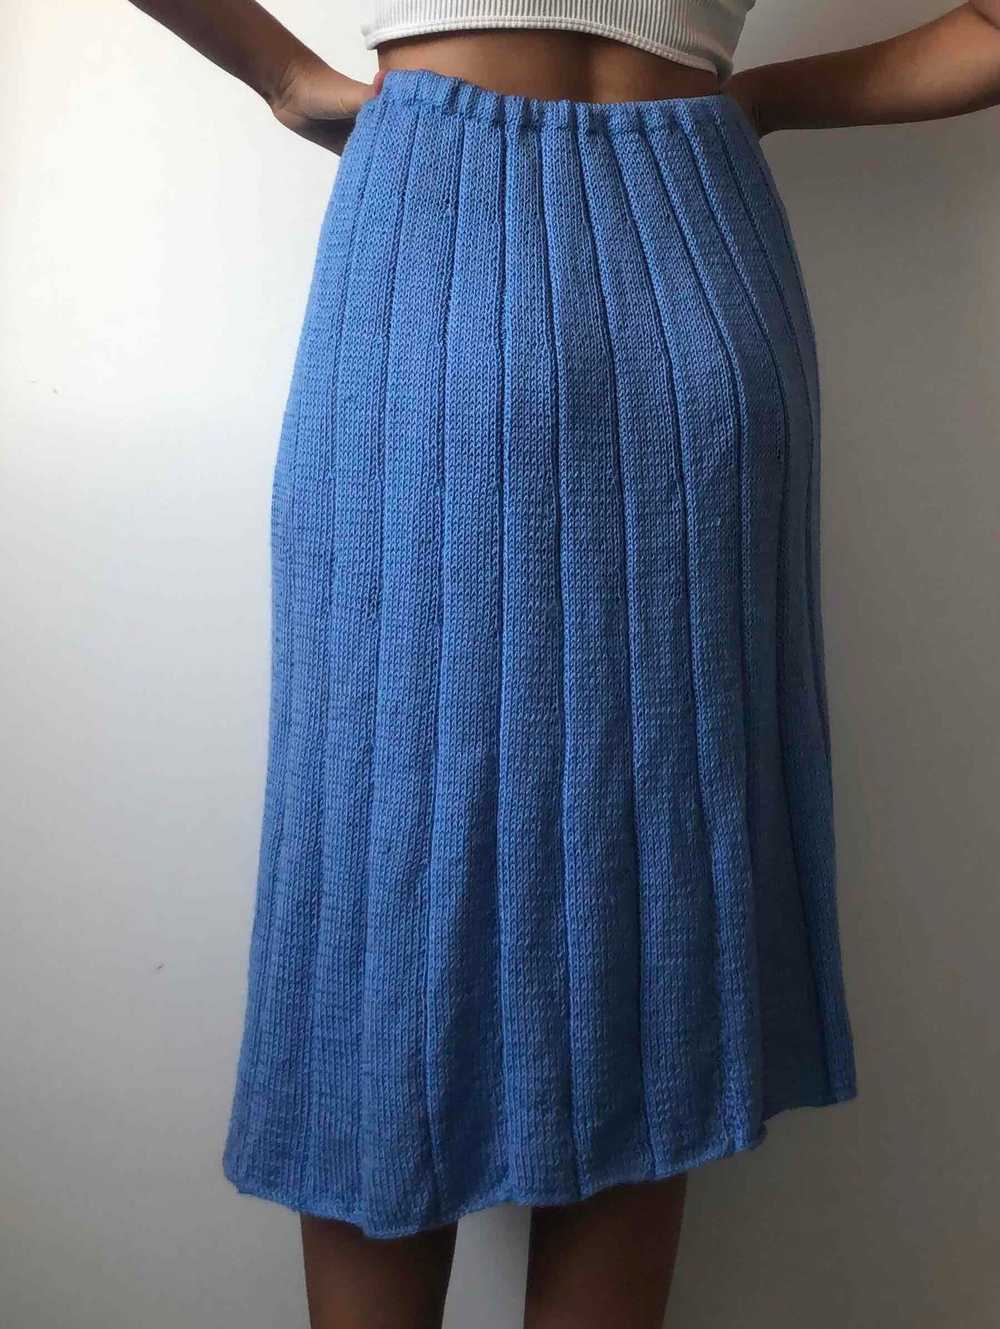 Knit skirt - image 6